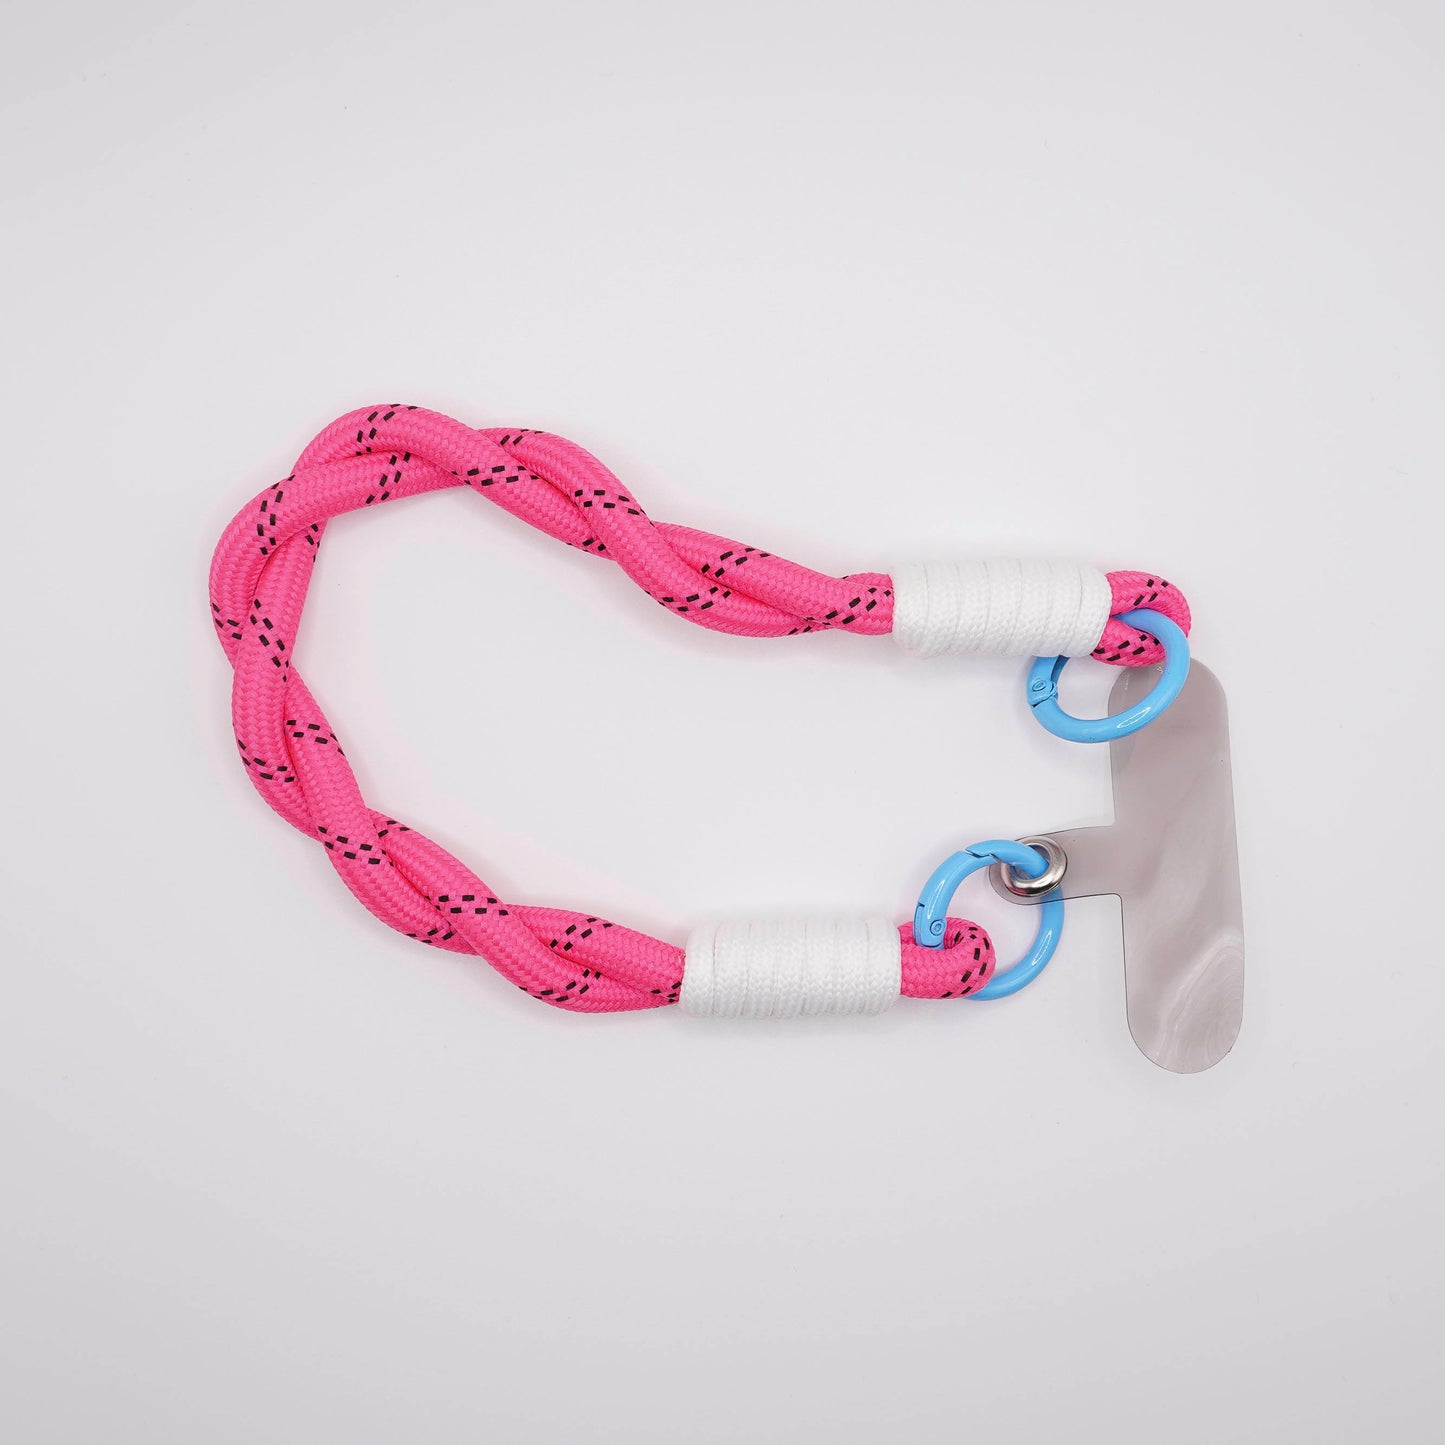 Pink and White wrist bracelet